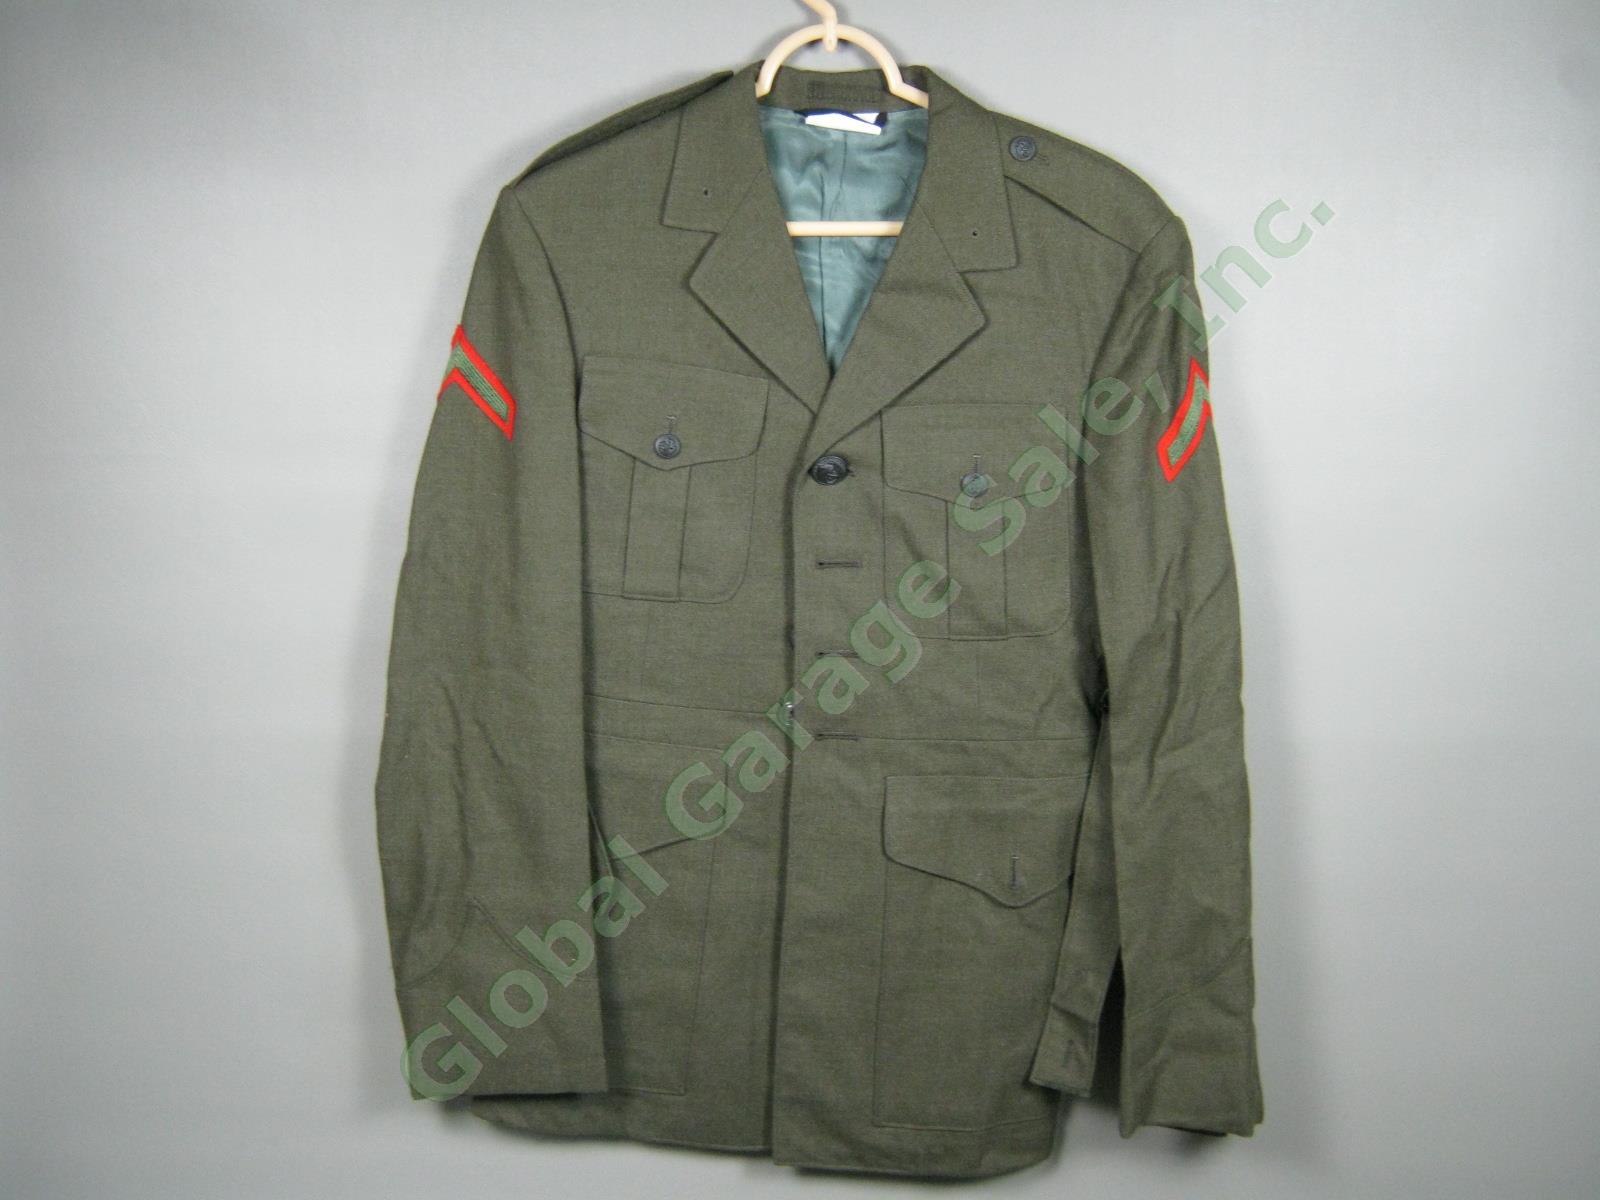 Huge USMC Marine Corps Charlie Uniform Pants Jackets Shirts Cap Lot Never Worn! 3